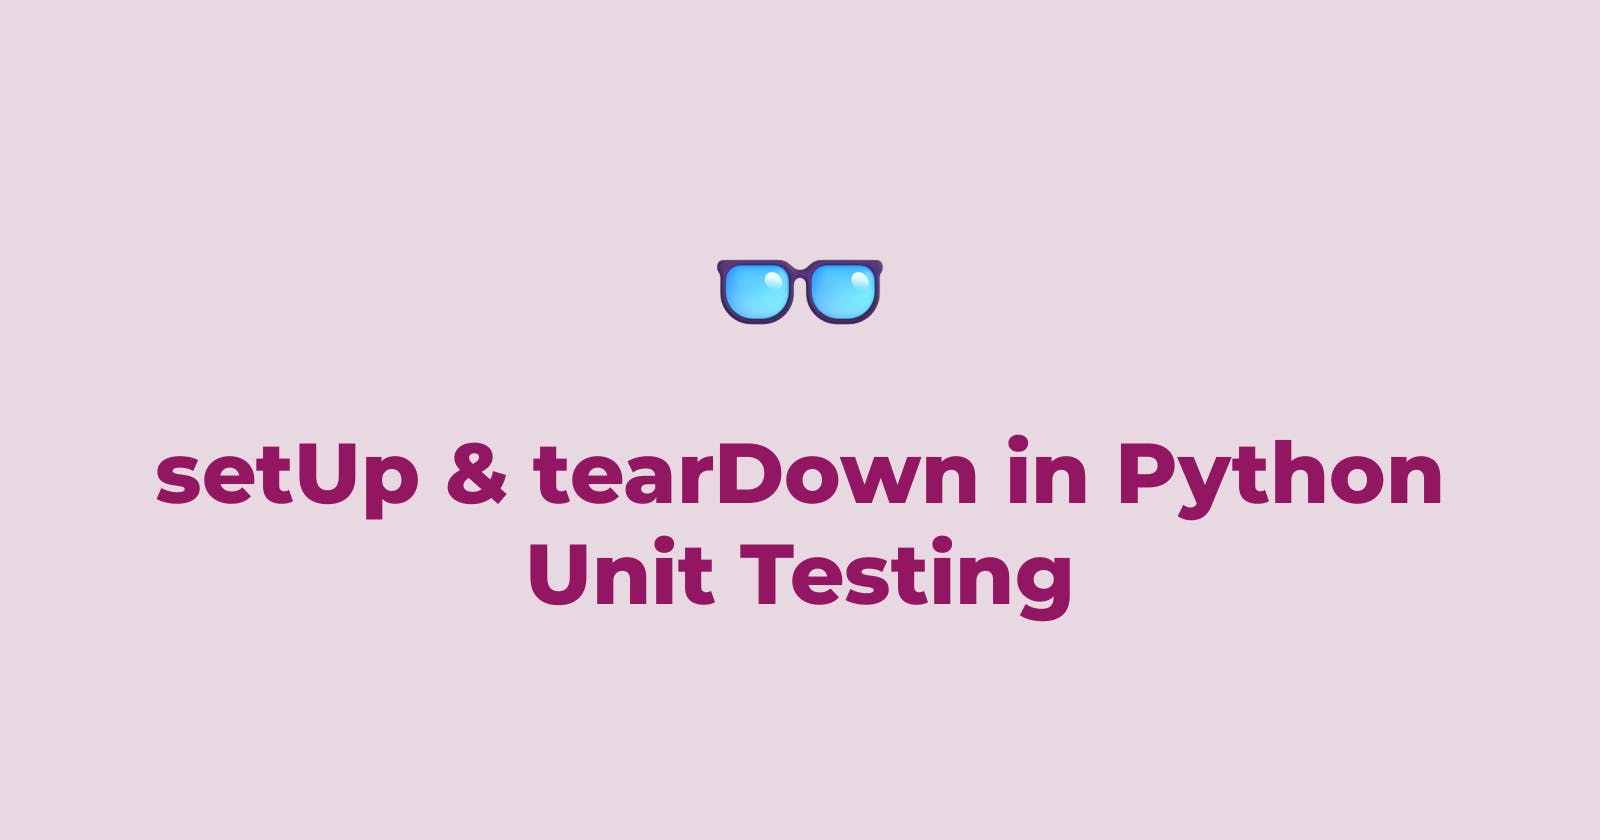 setUp & tearDown in Python Unit Testing